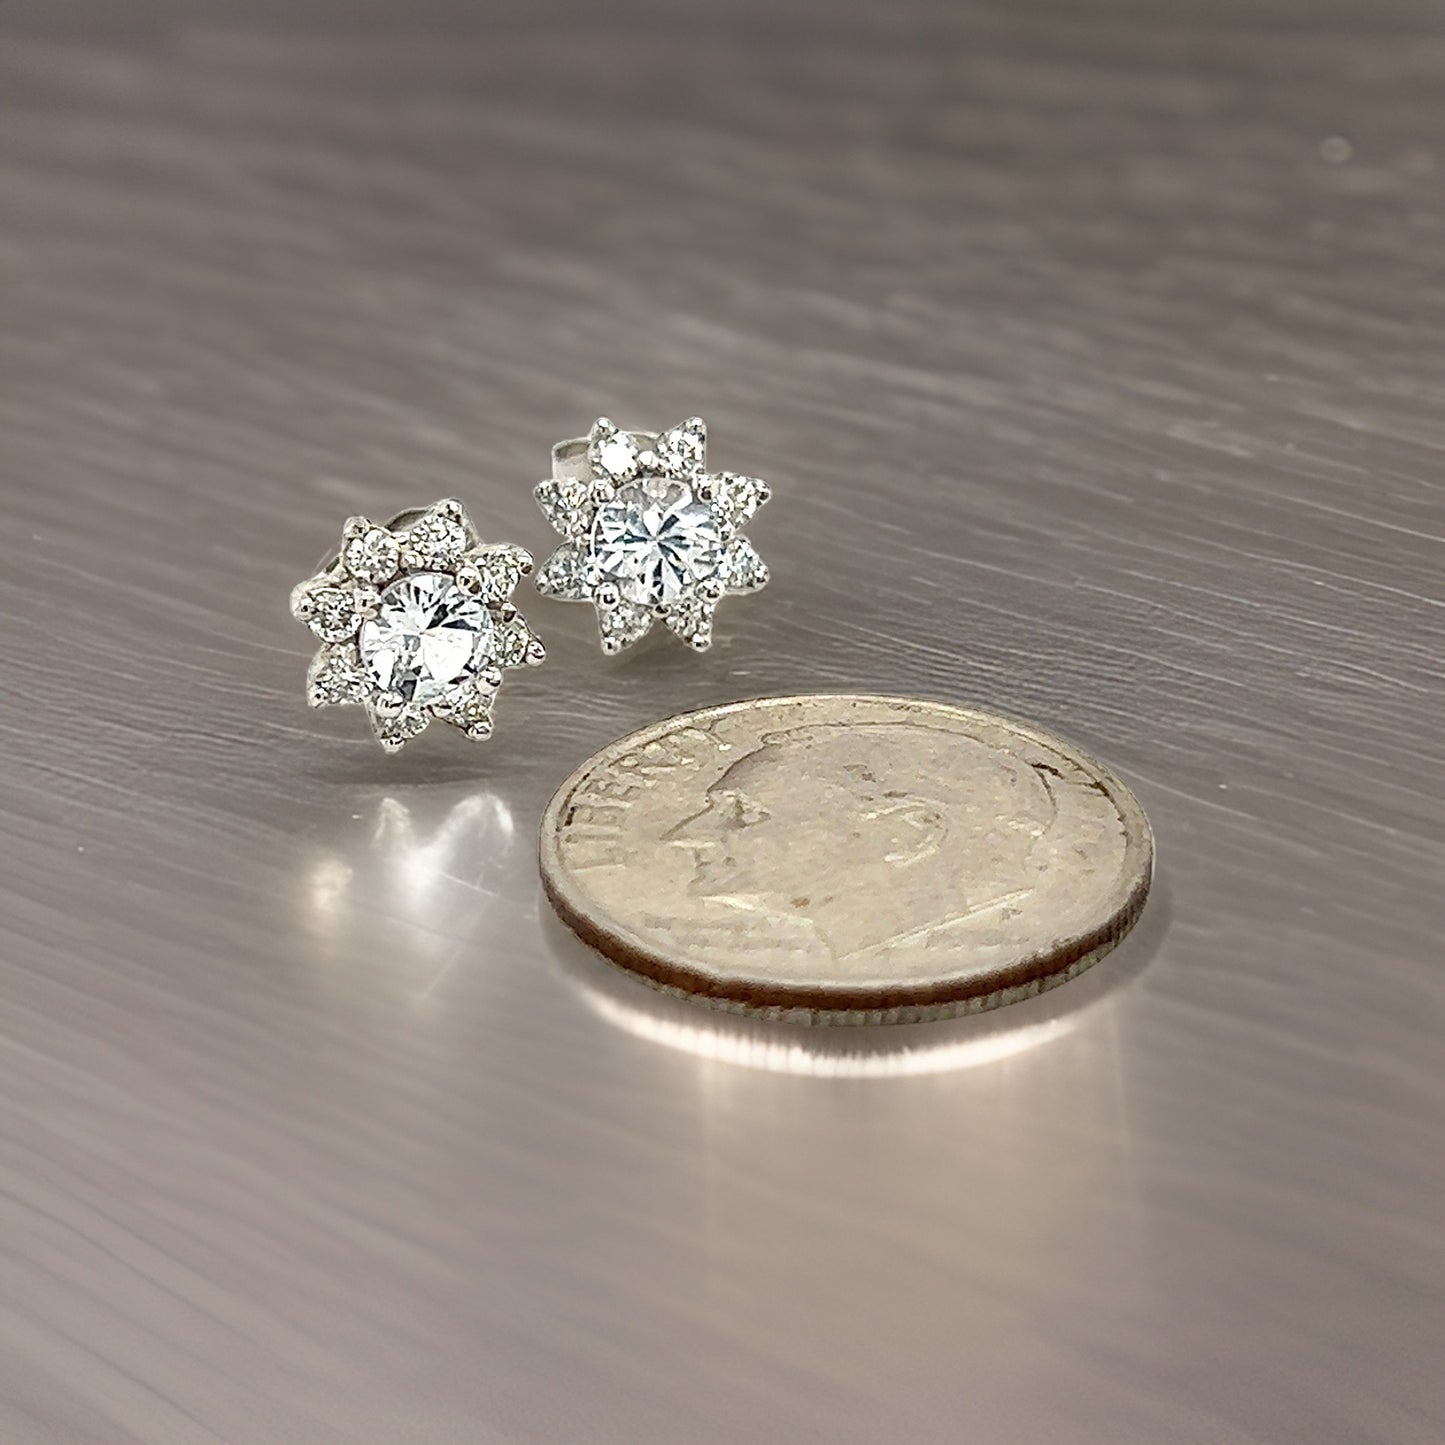 Natural Sapphire Diamond Halo Stud Earrings 14k Gold 1.02 TCW Certified $3,950 121426 - Certified Fine Jewelry